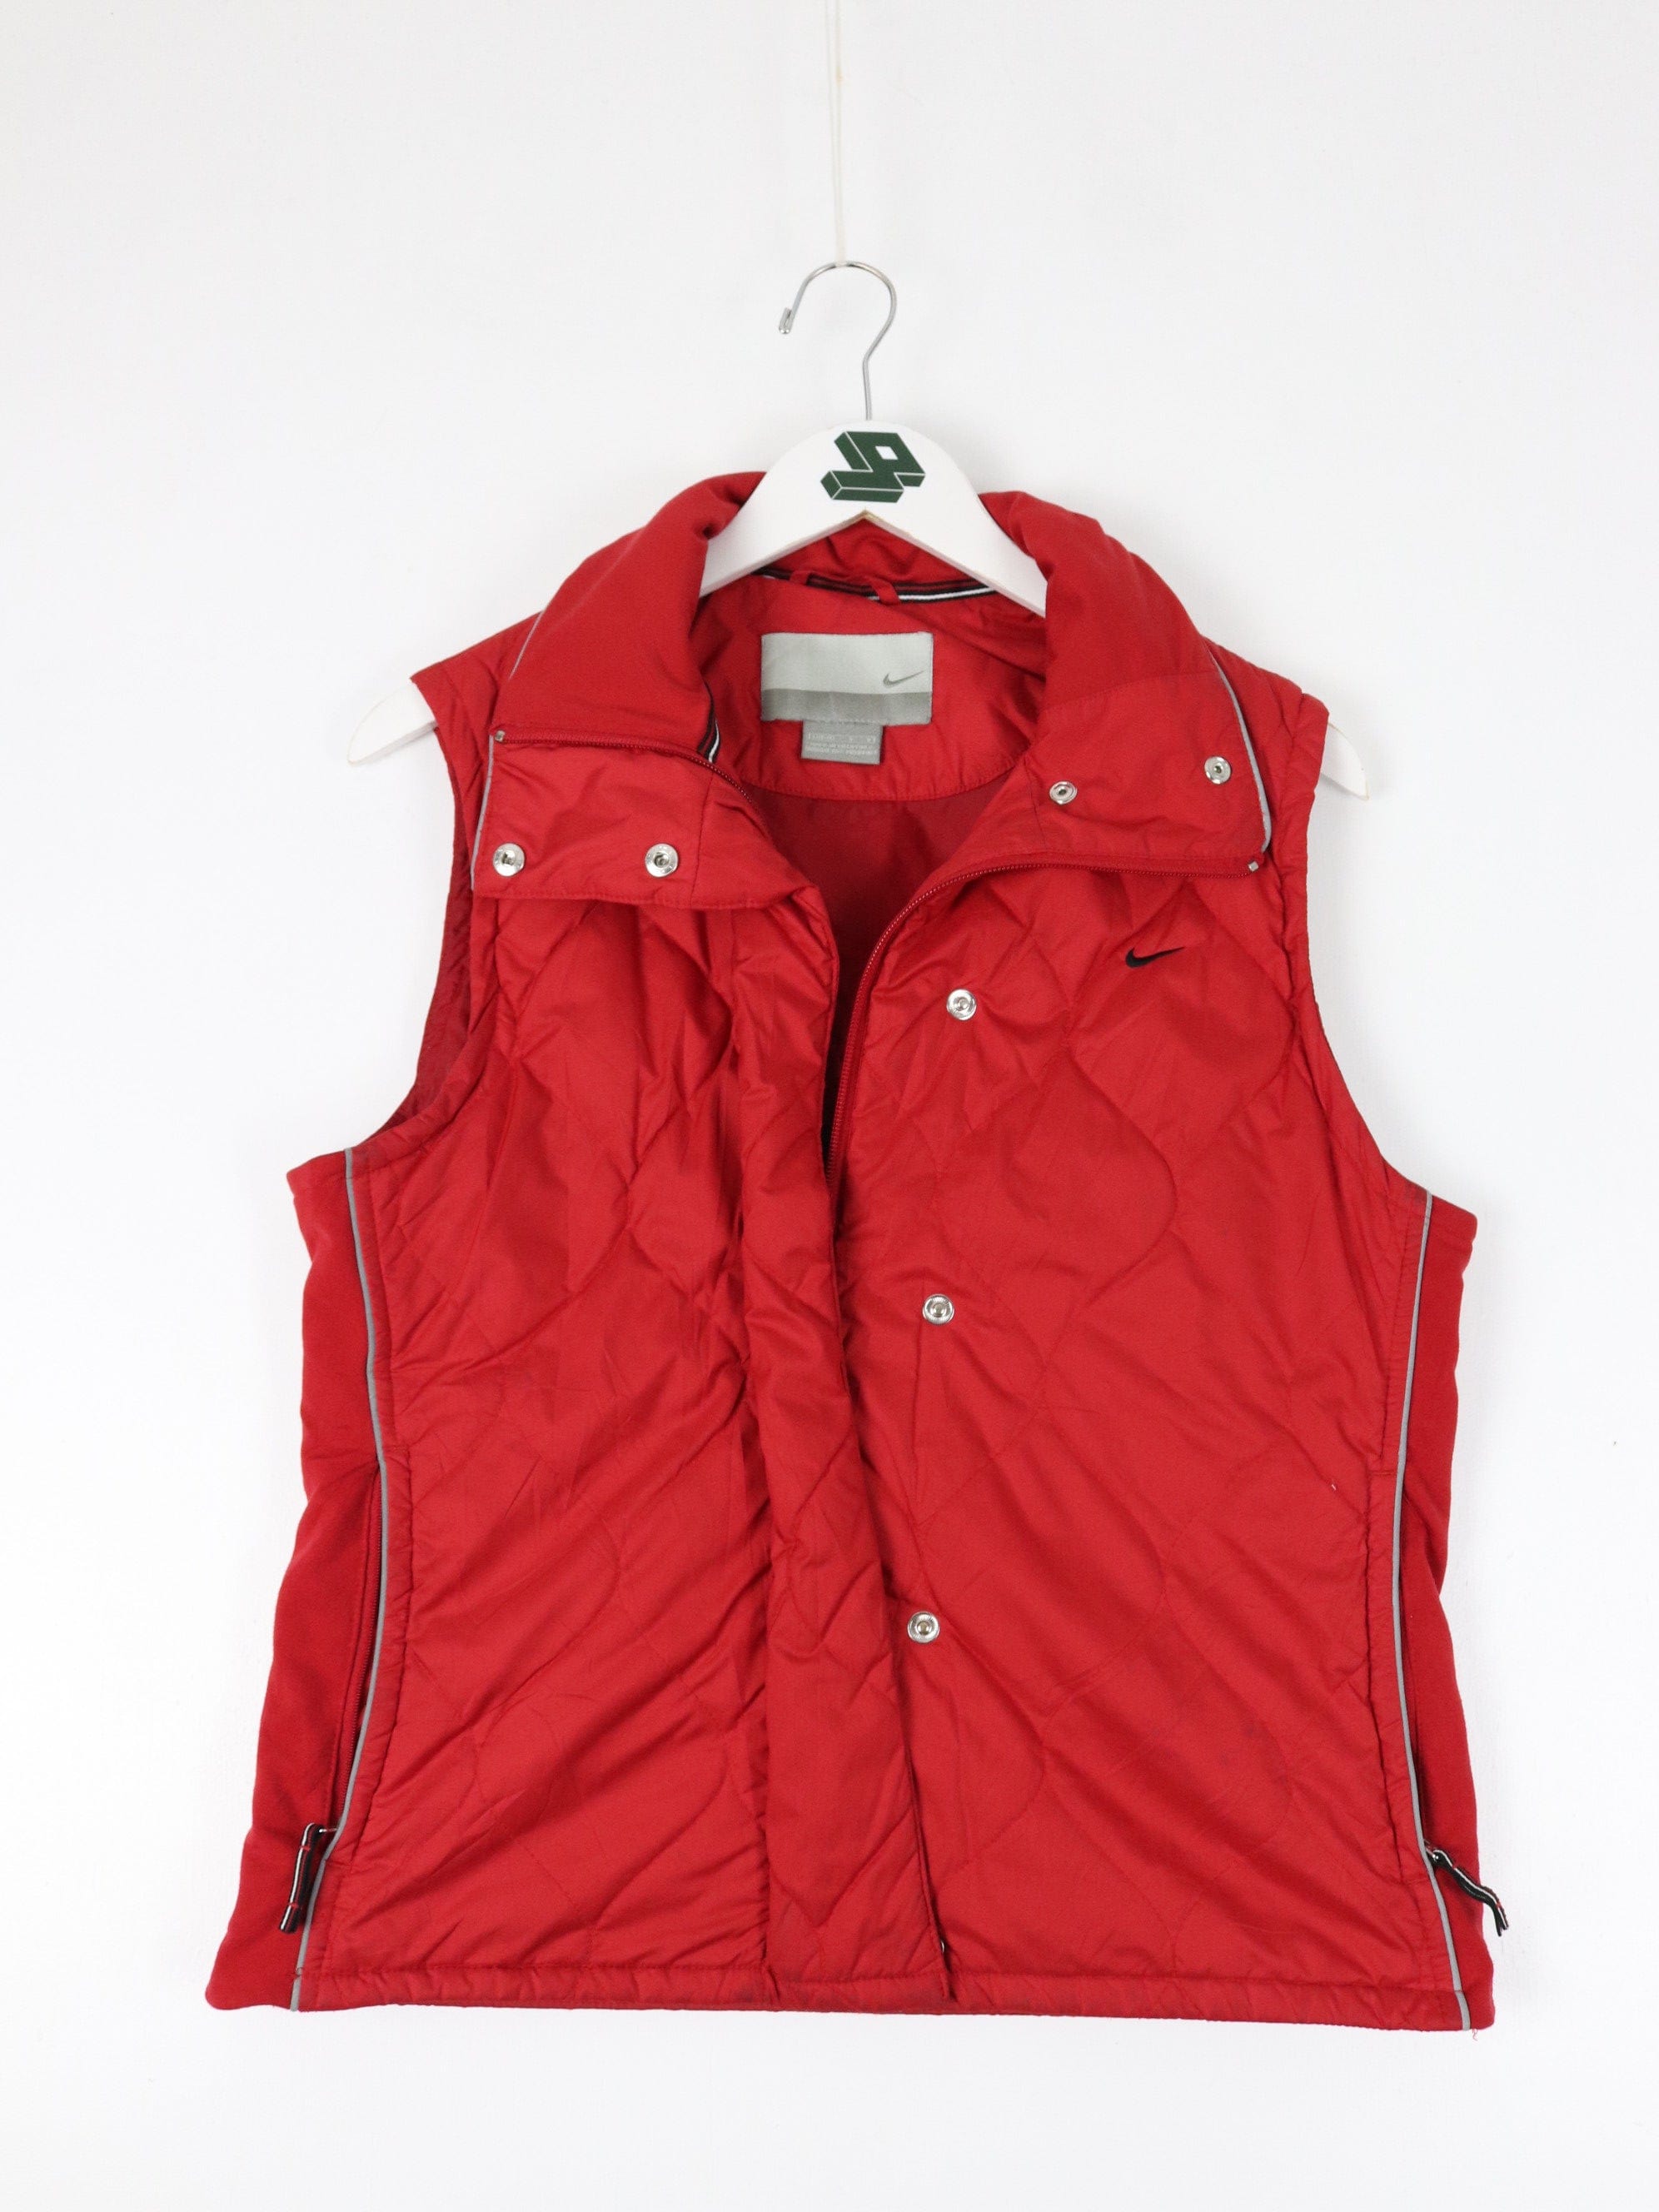 Vintage Nike Vest Womens Large Red Swoosh Jacket Windbreaker